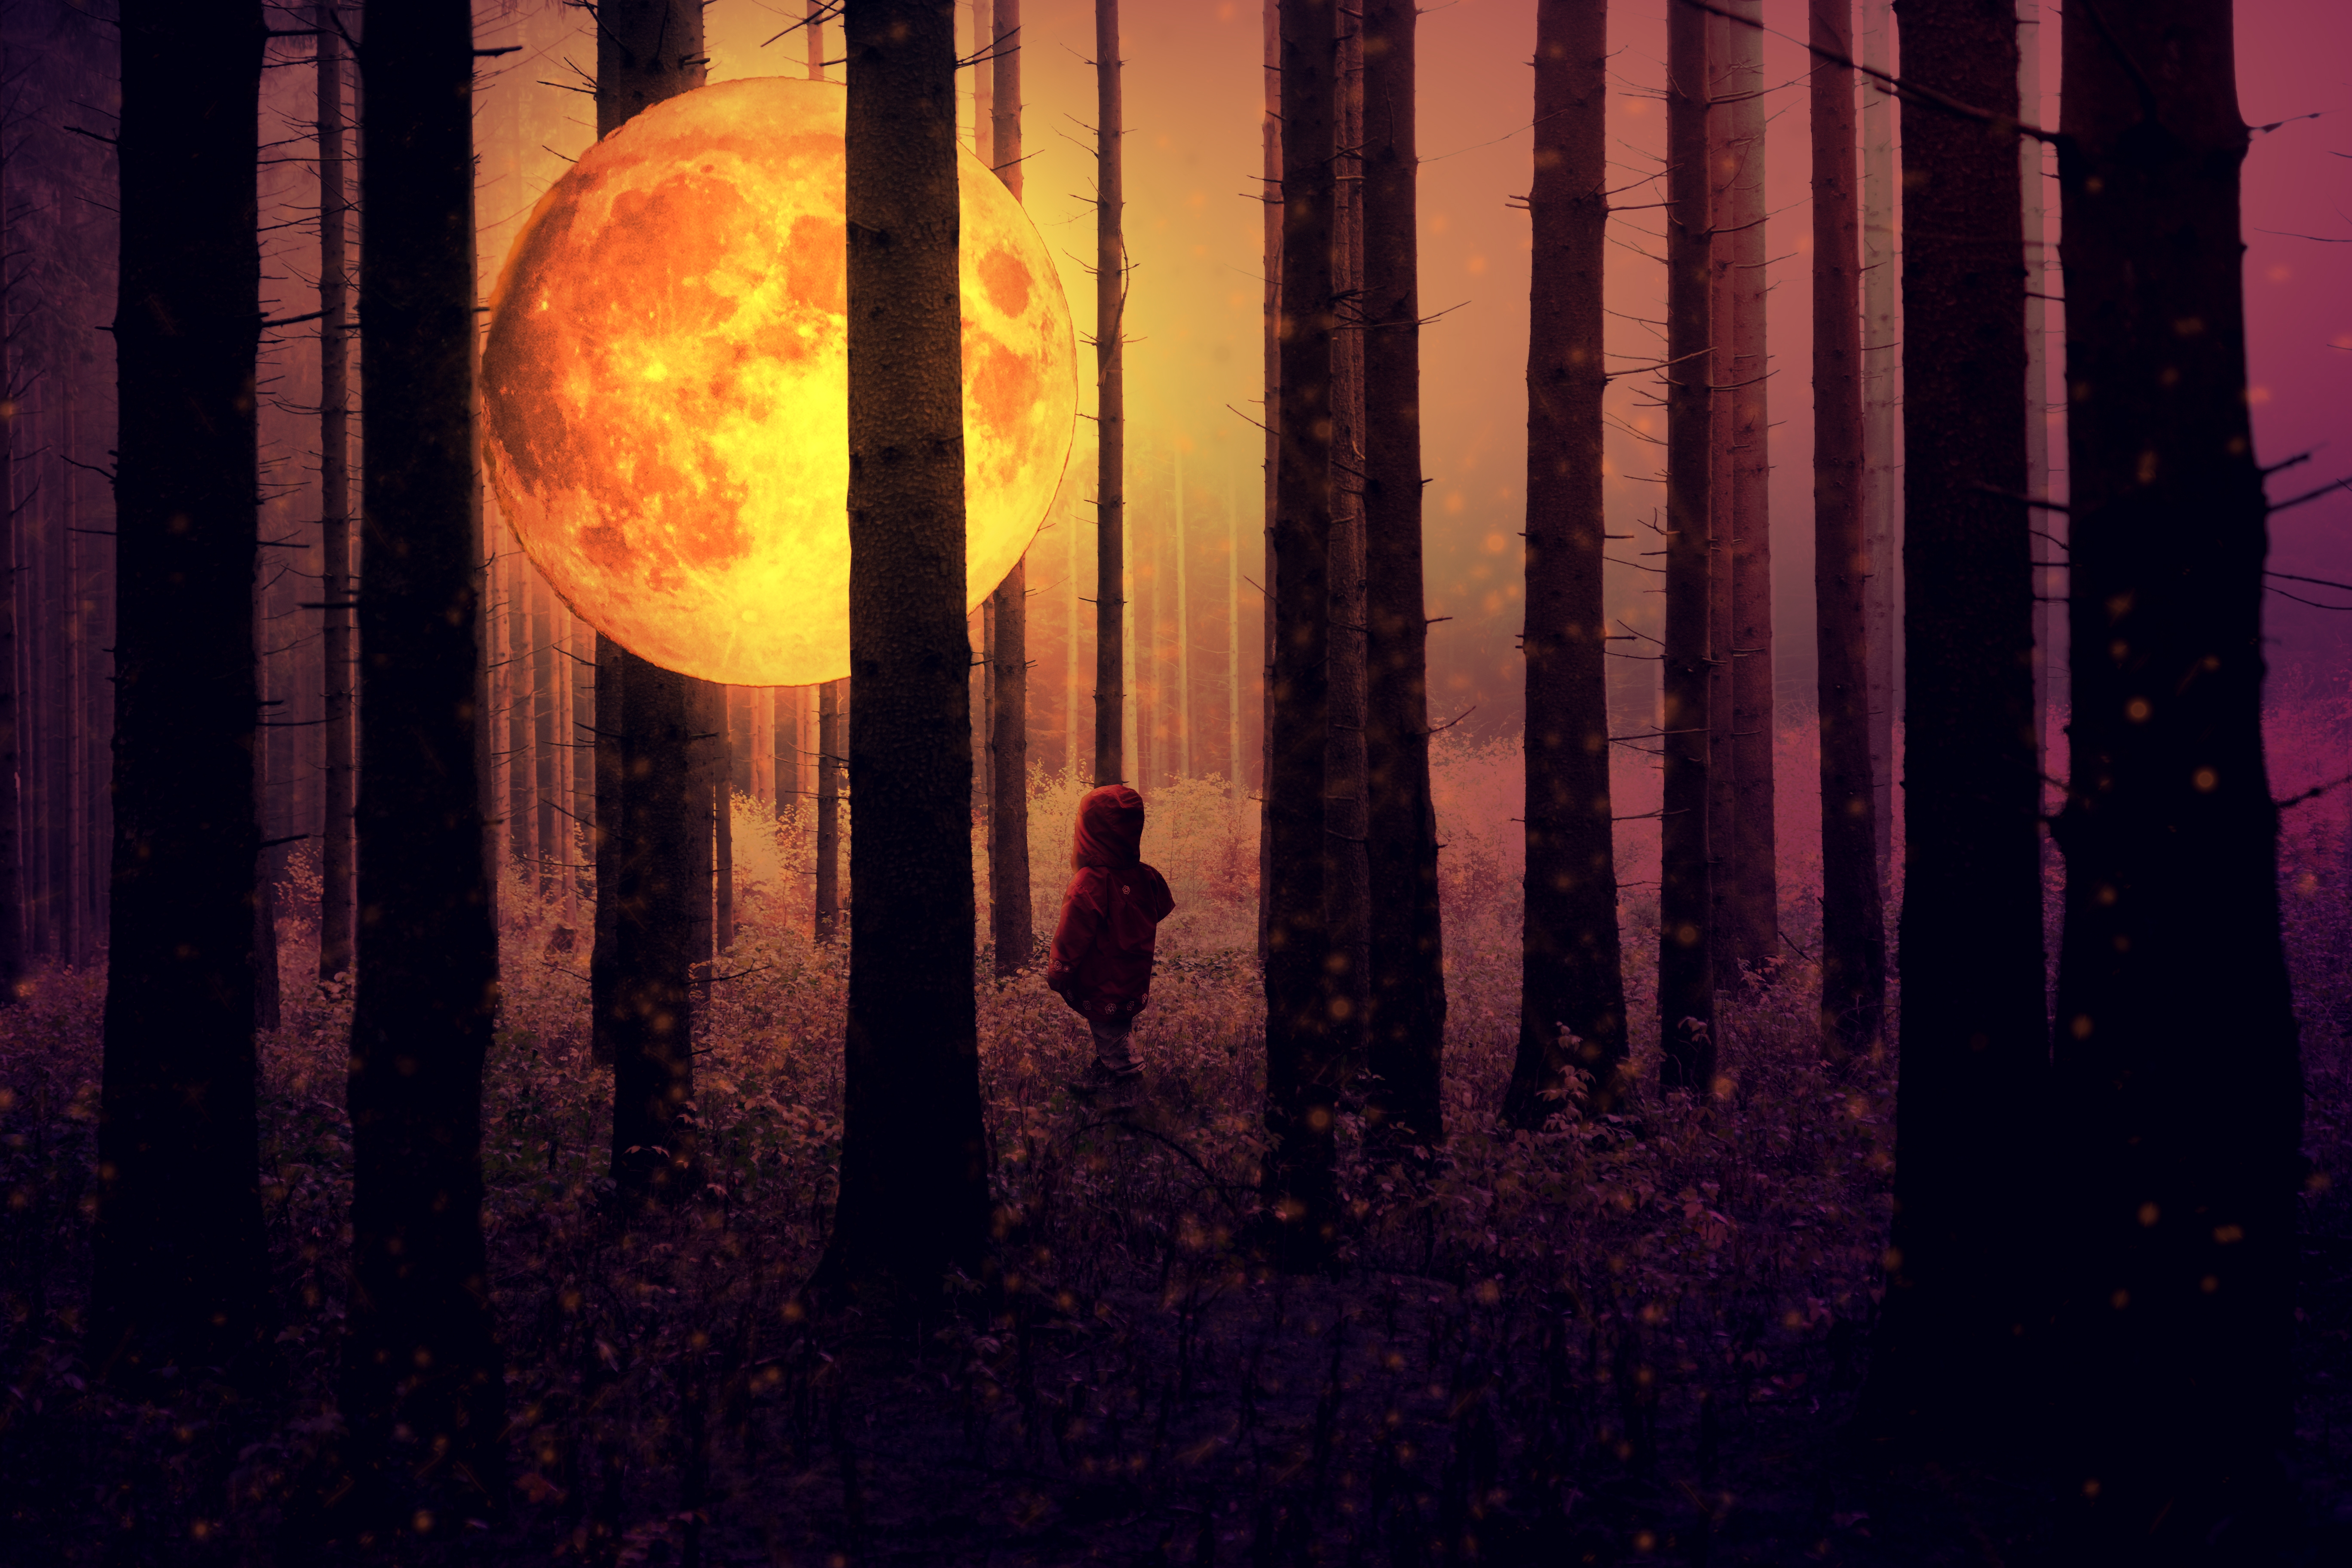 HD wallpaper, Surreal, Kid, Tall Trees, Full Moon, Night Time, Forest, Mystic, 5K, Woodland